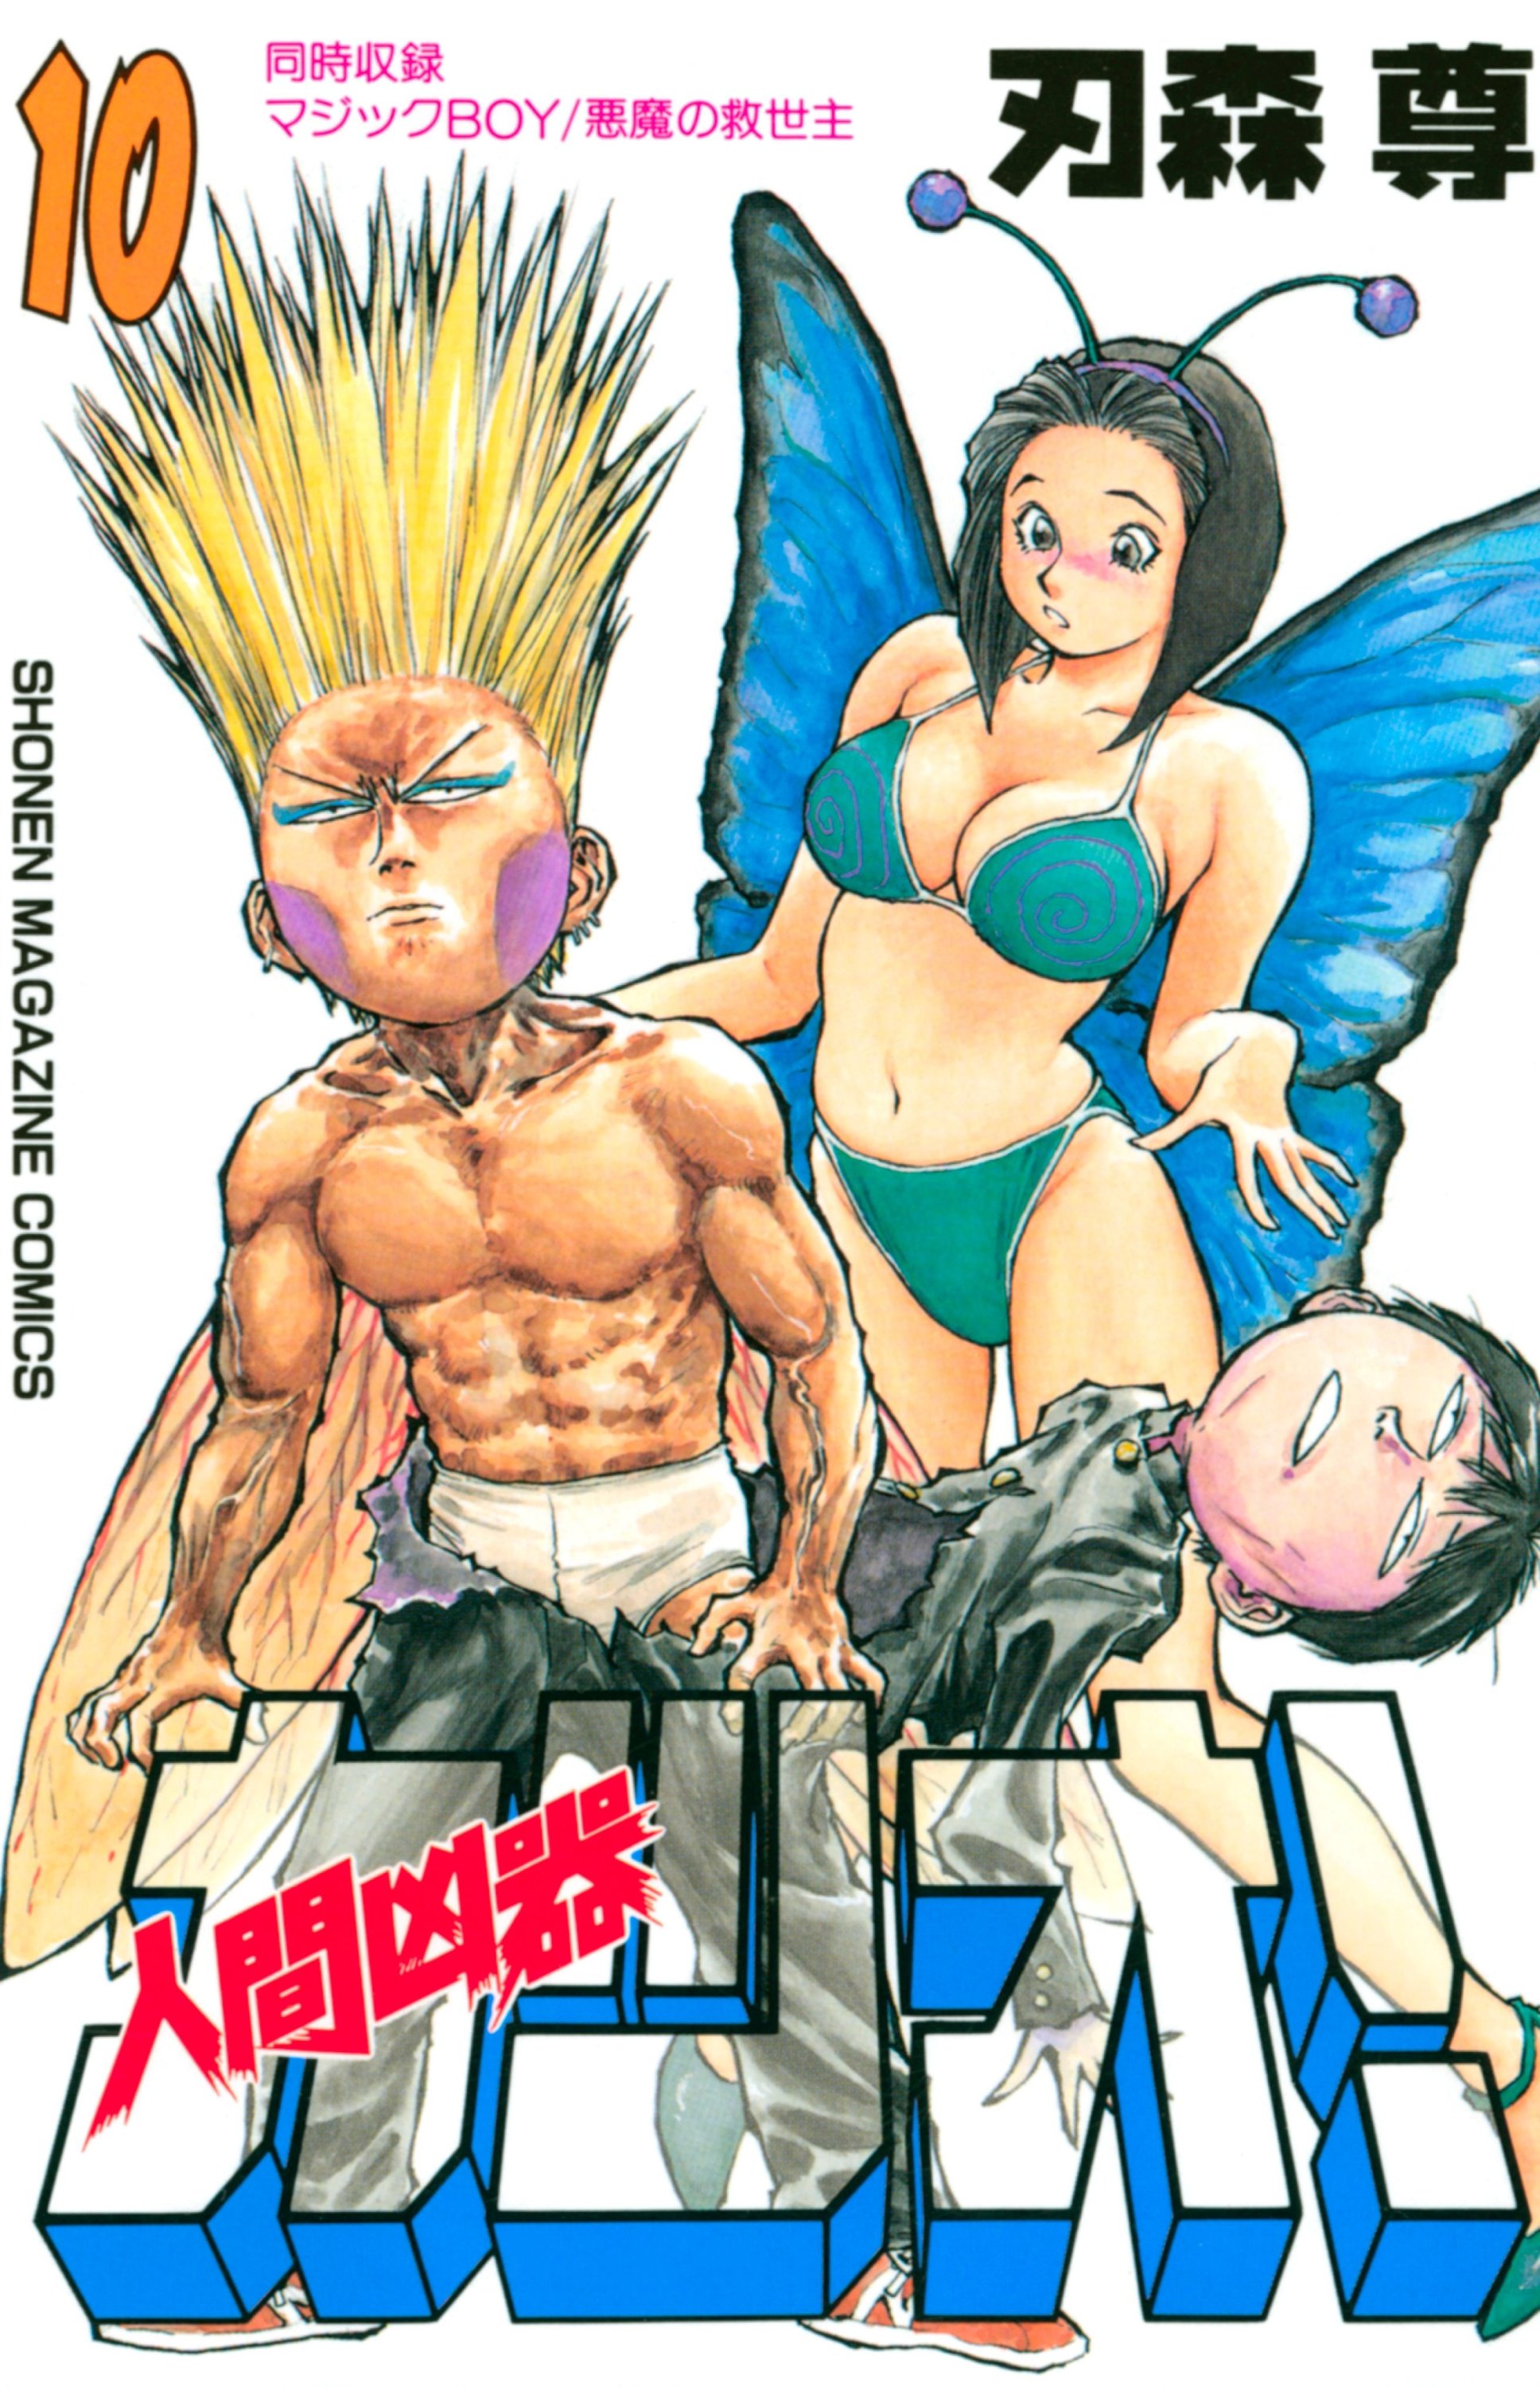 Katsuo manga